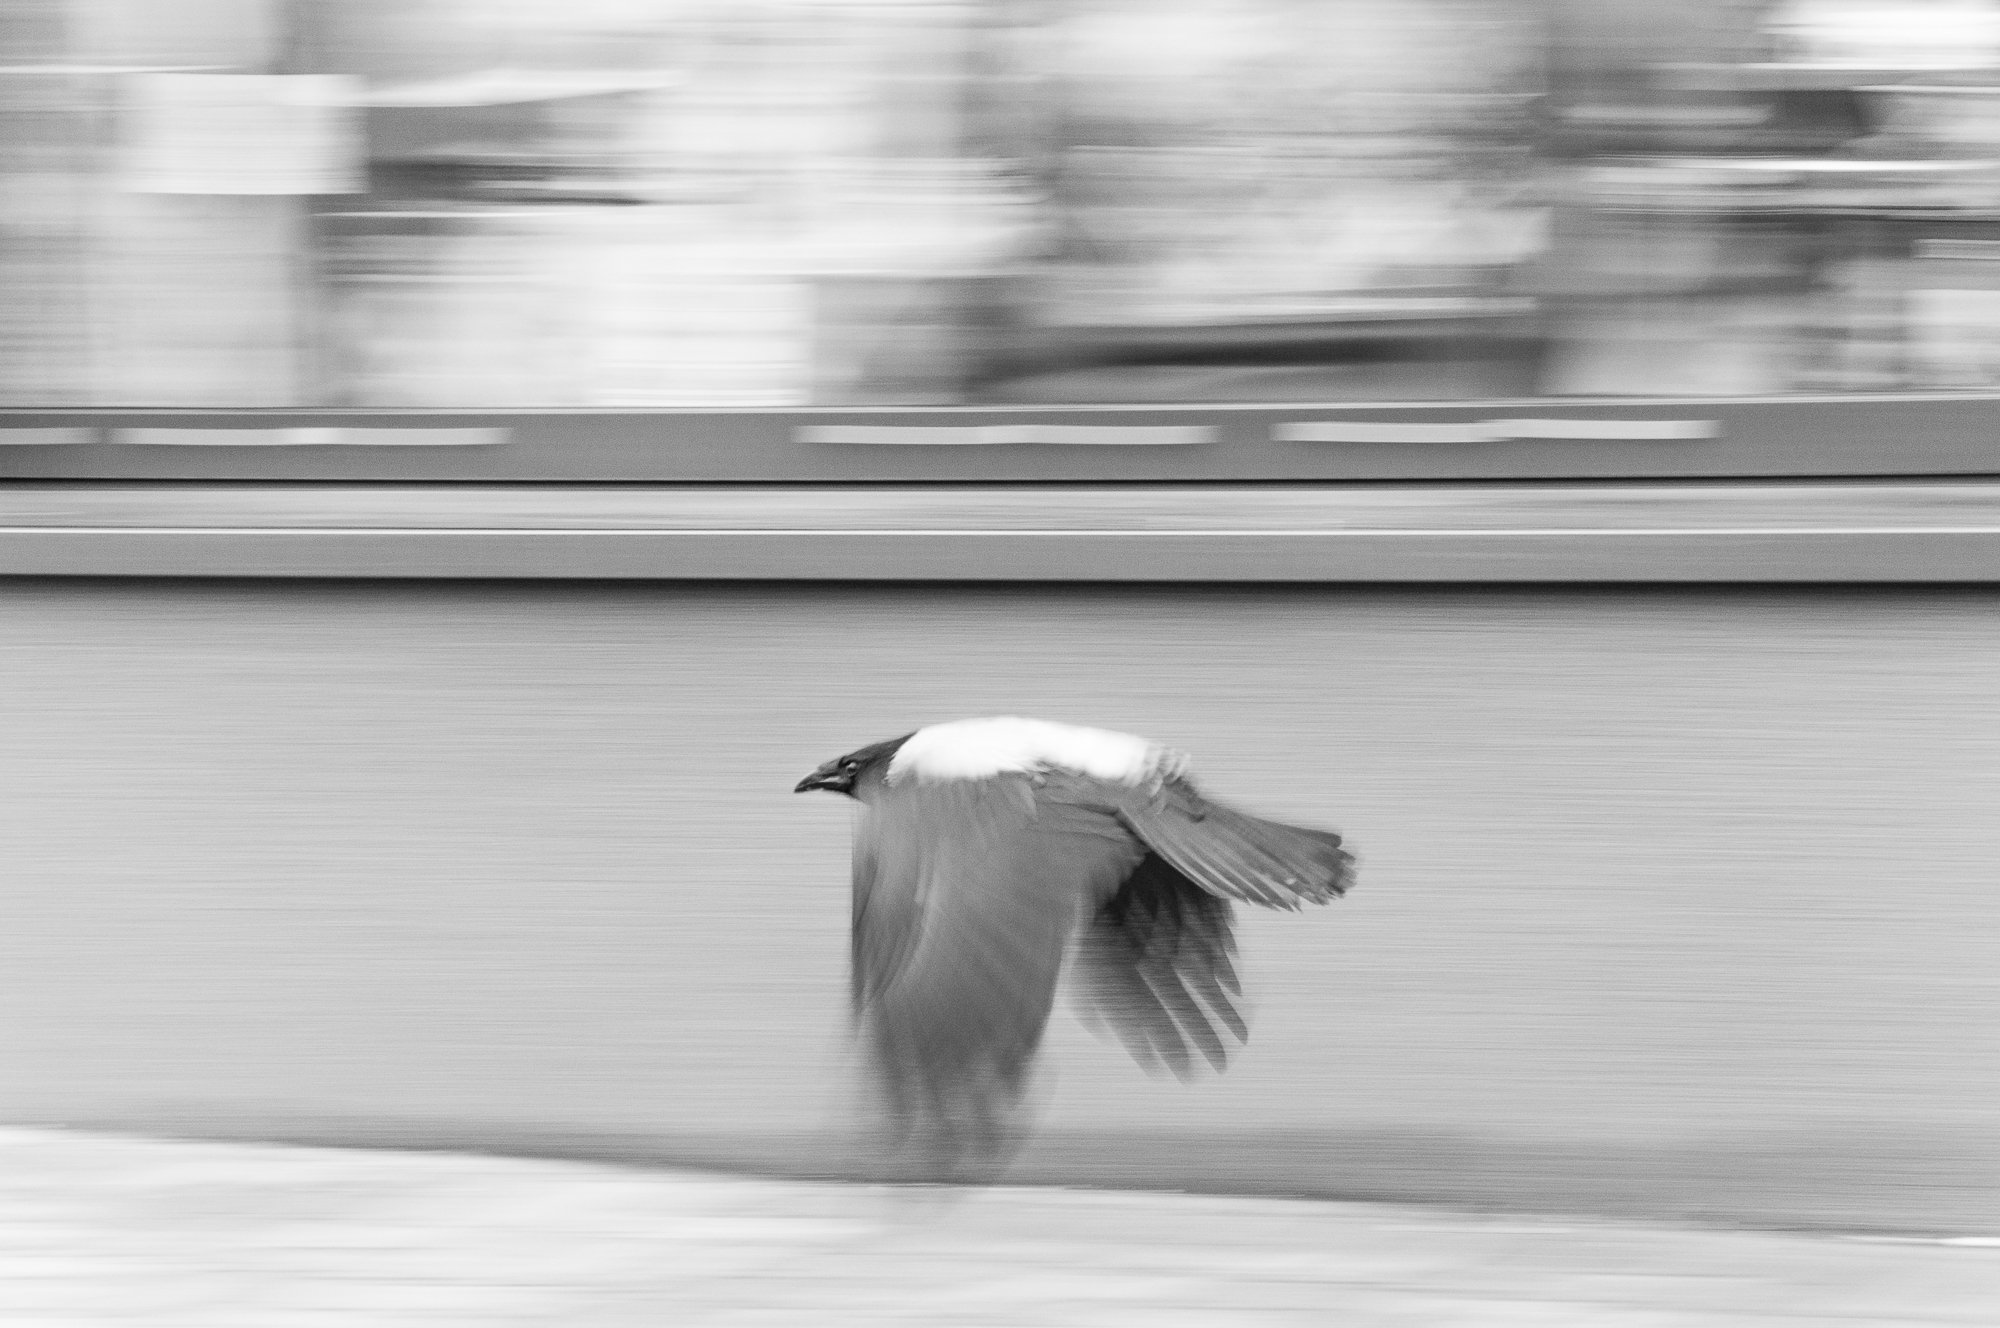 Adam Mazek Photography Warsaw 2021. Post: "The 36th birthday." Flying bird. Animal.